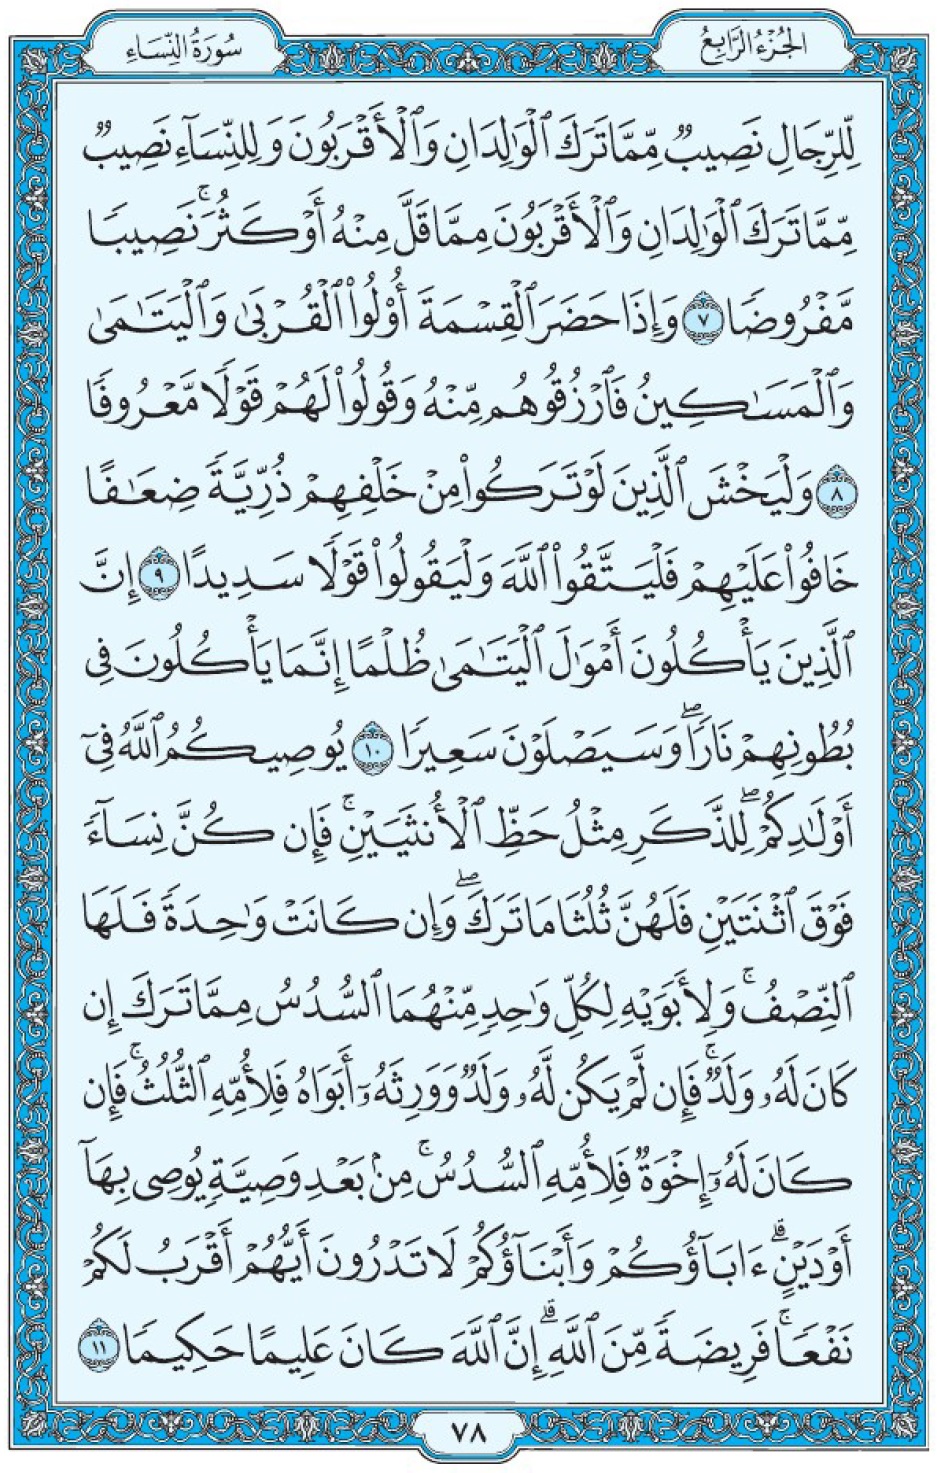 Коран Мединский мусхаф страница 78, Ан-Ниса, аят 7-11